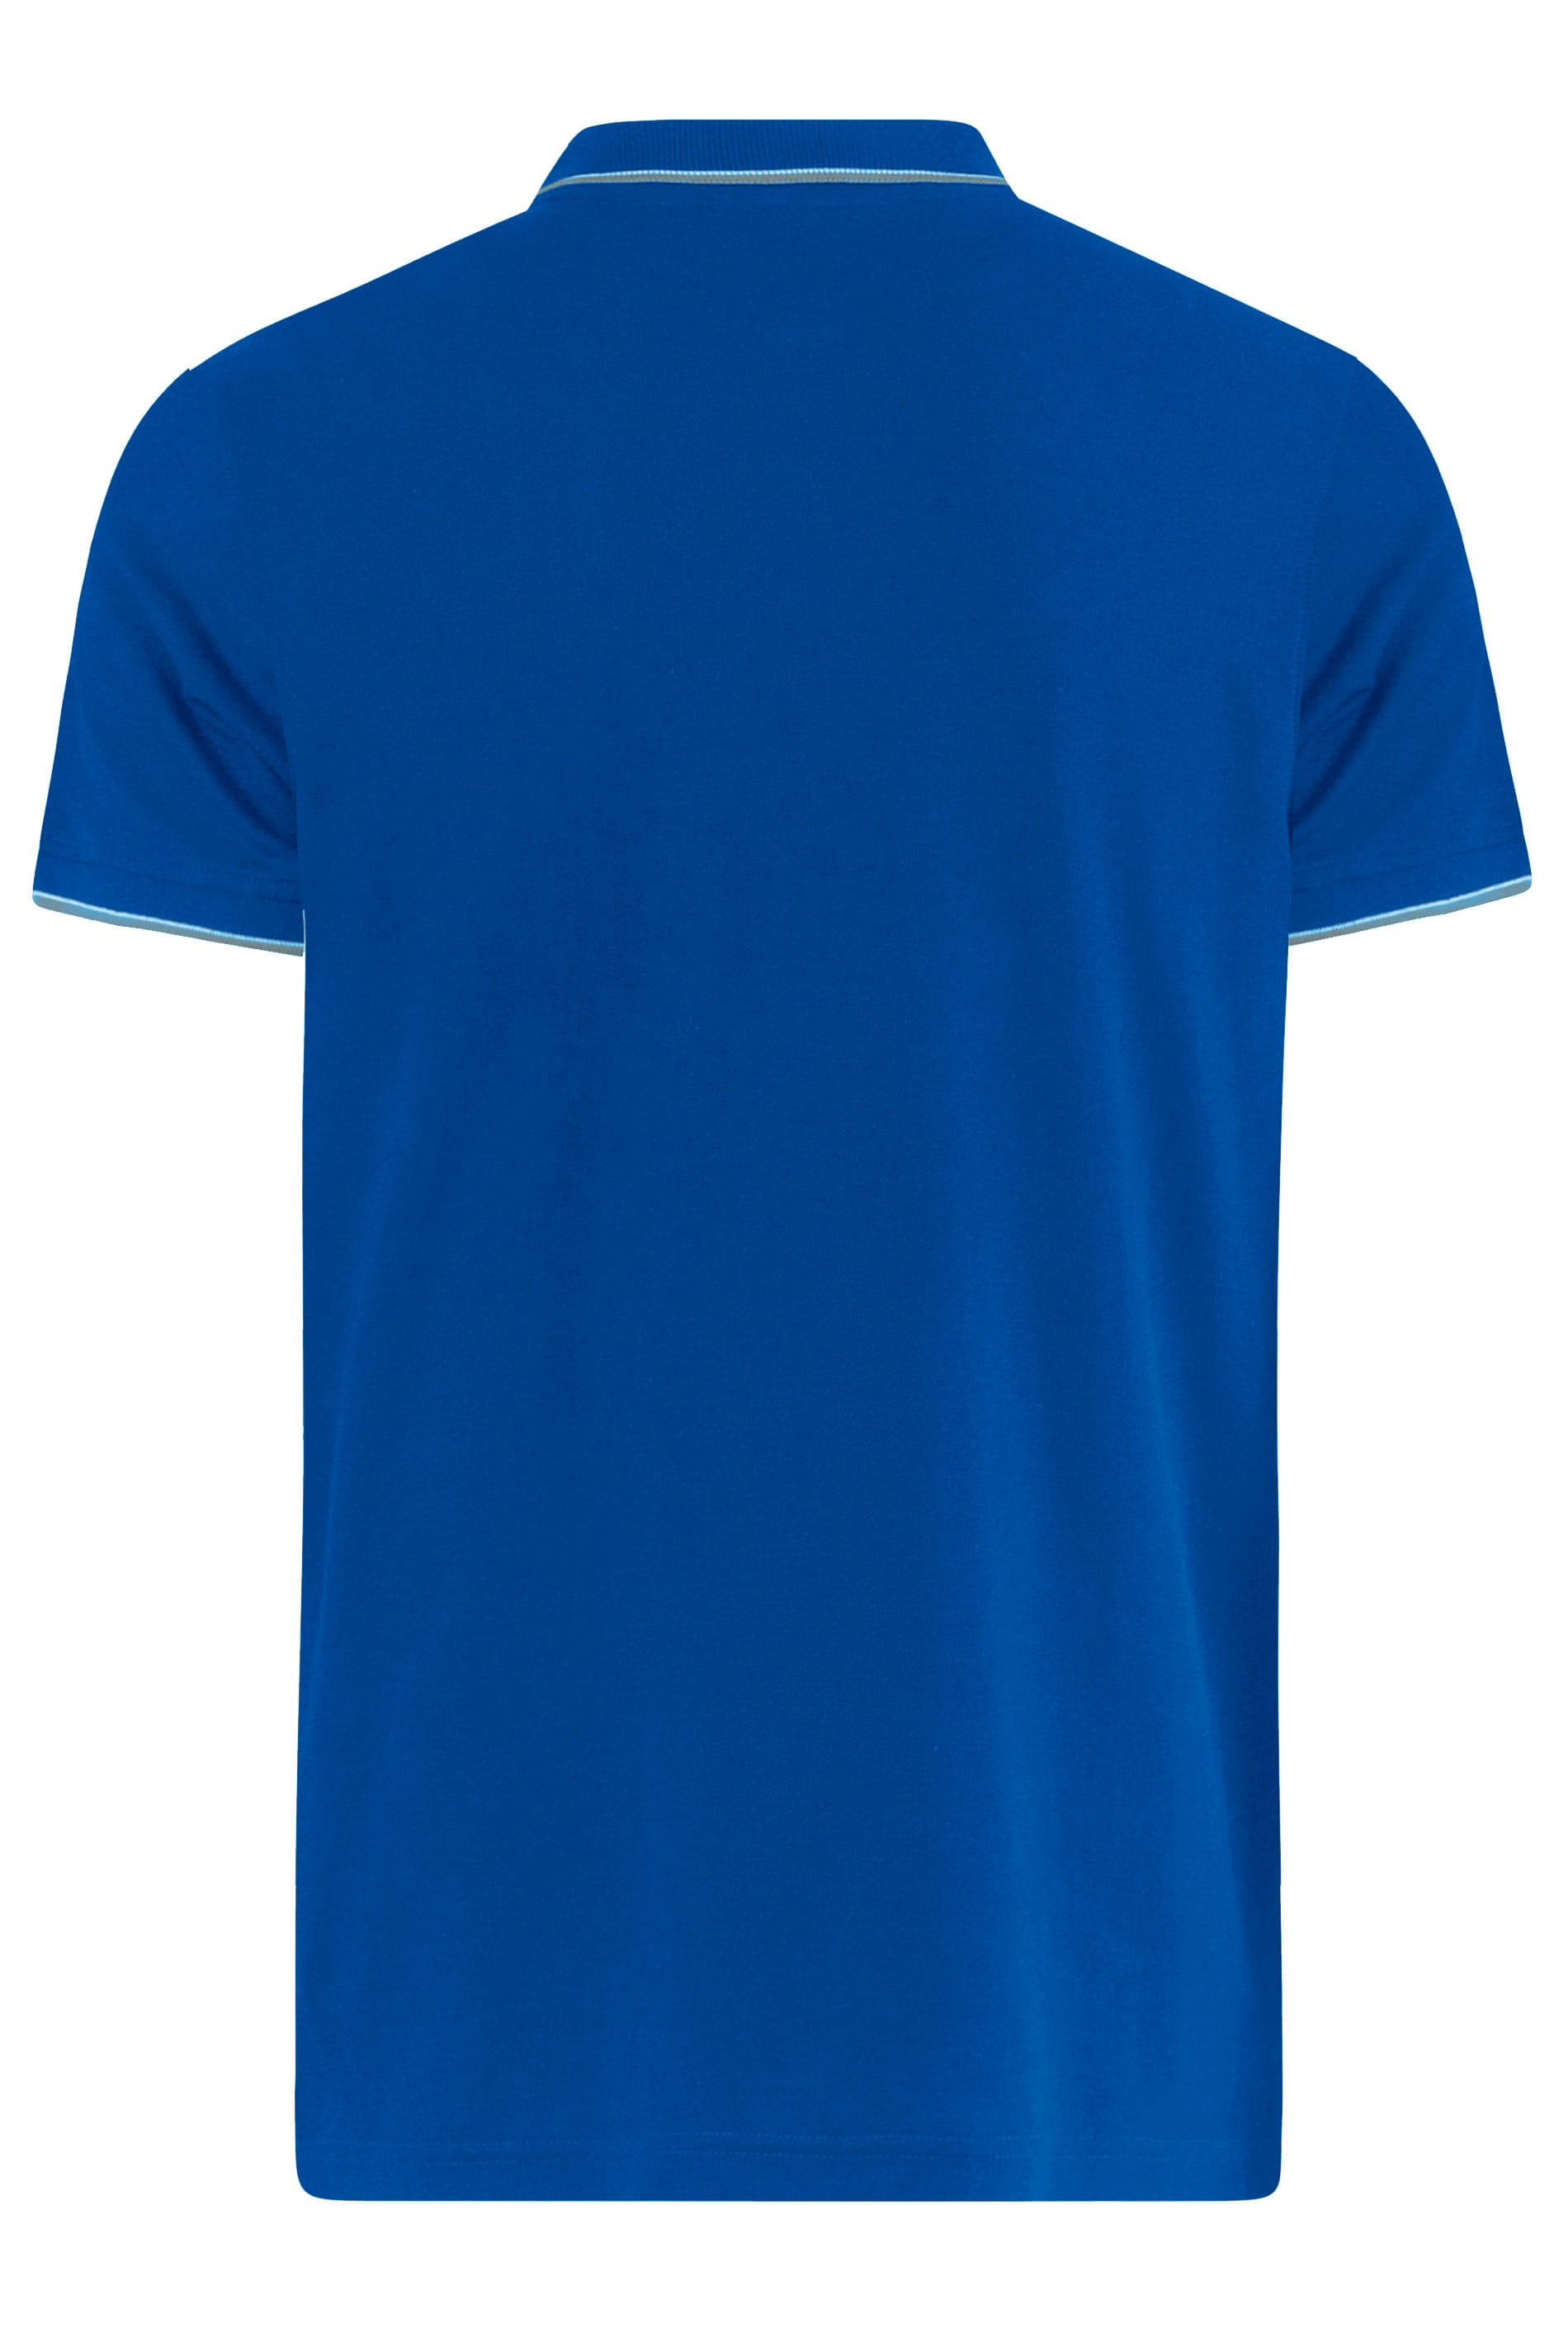 D555 Royal Blue Tipped Polo Shirt | BadRhino